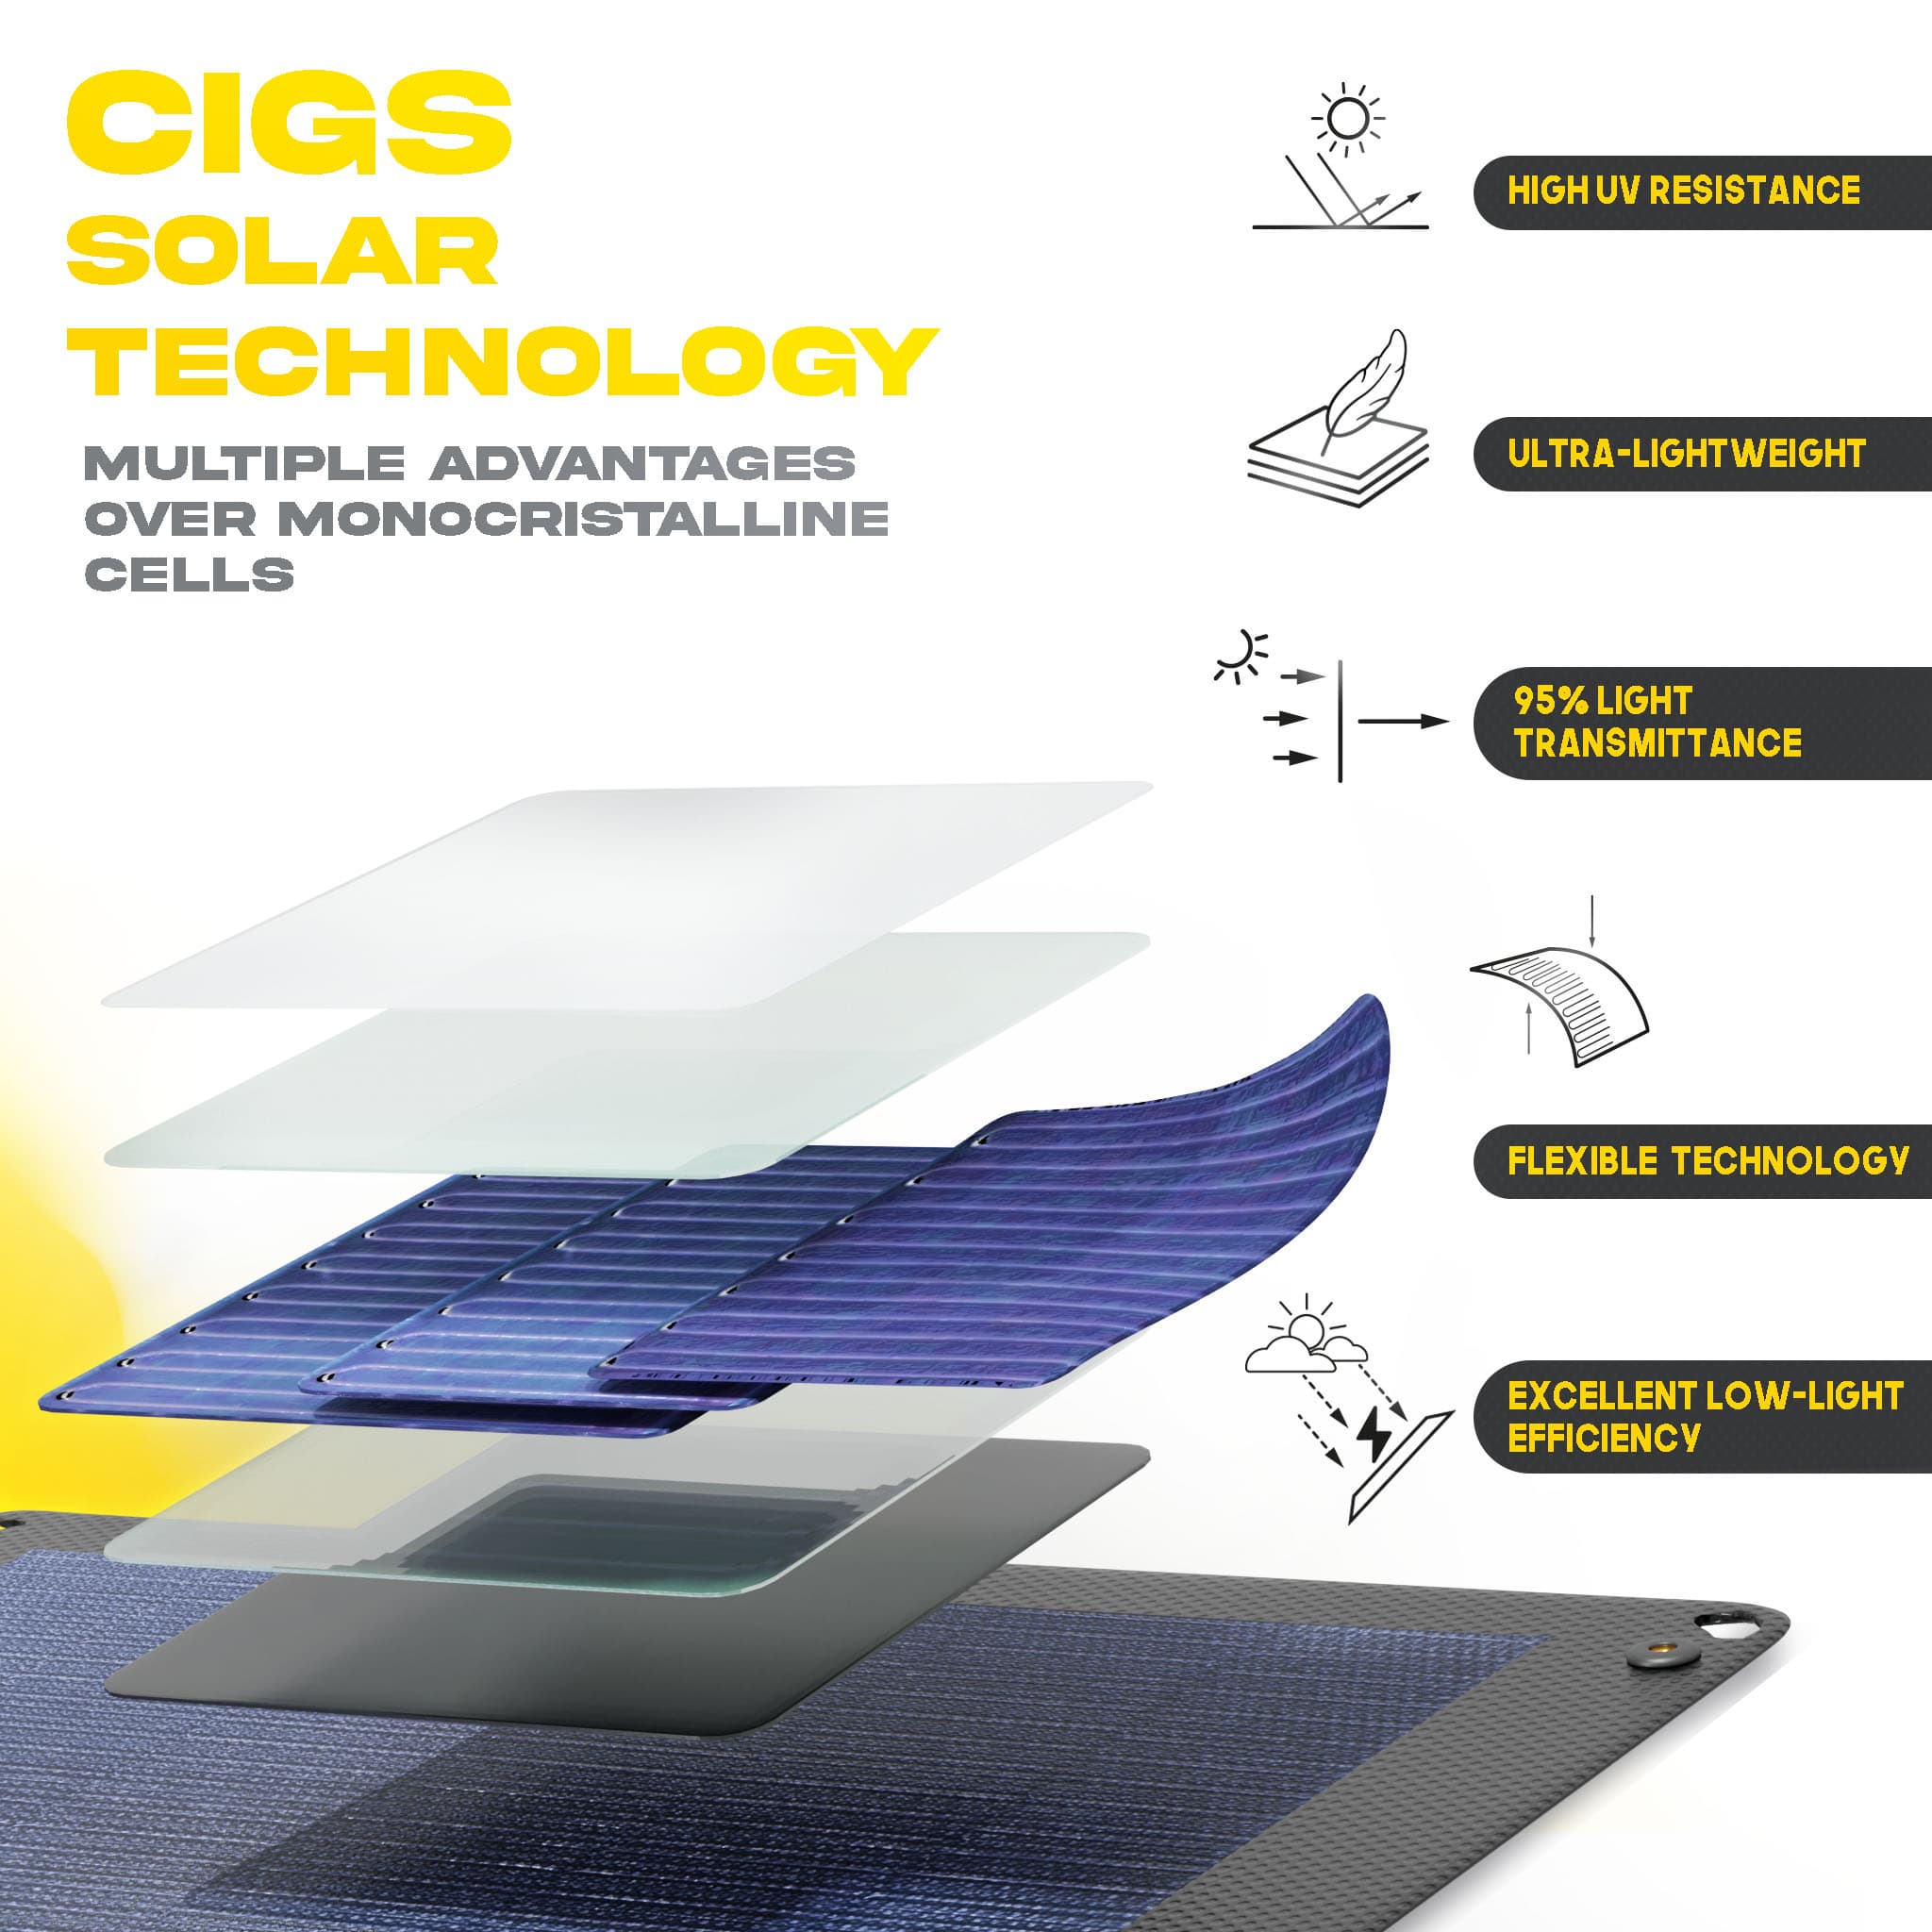 Uitleg over de cigs solar technologie 